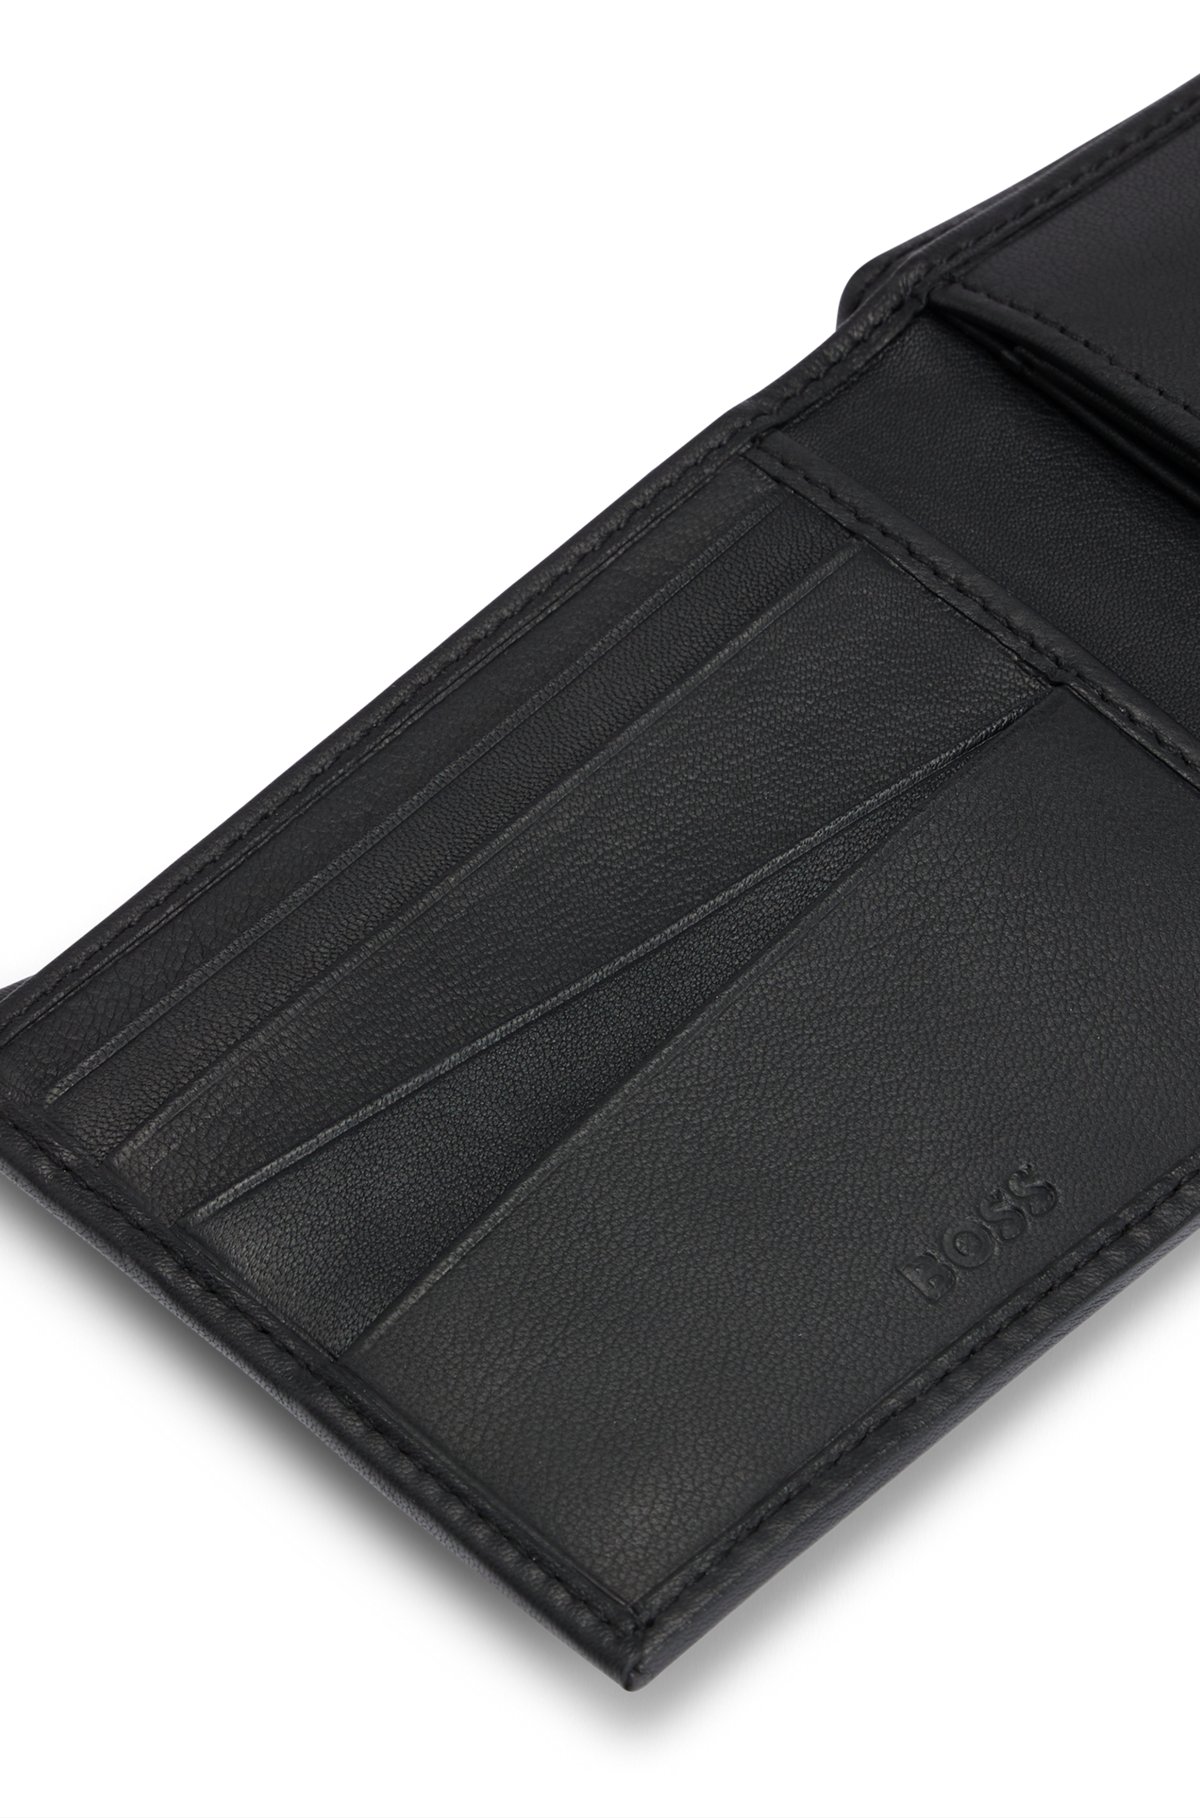 Monogram-trim leather wallet with coin pocket, Black